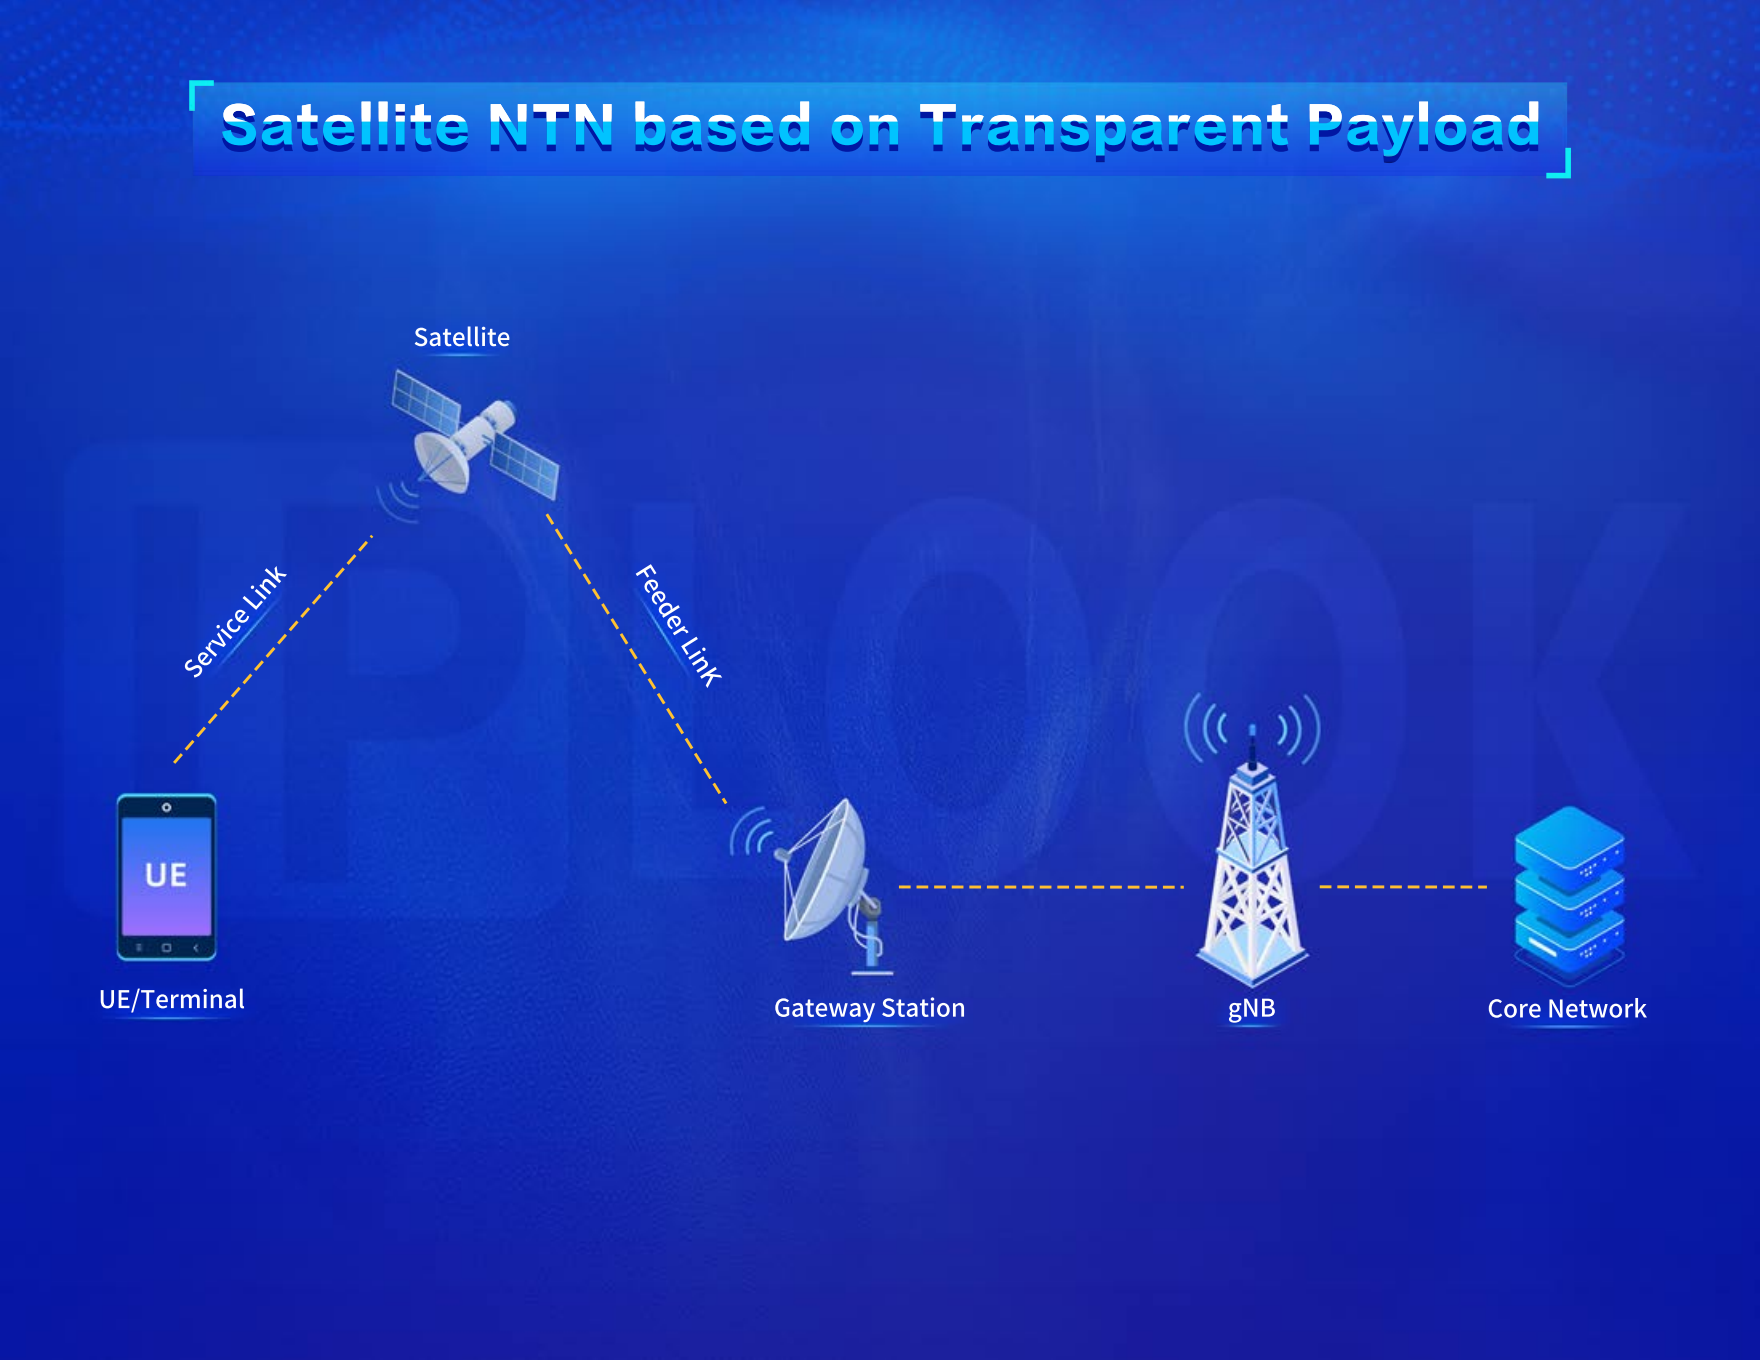 Satellite NTN based on Transparent Payload: